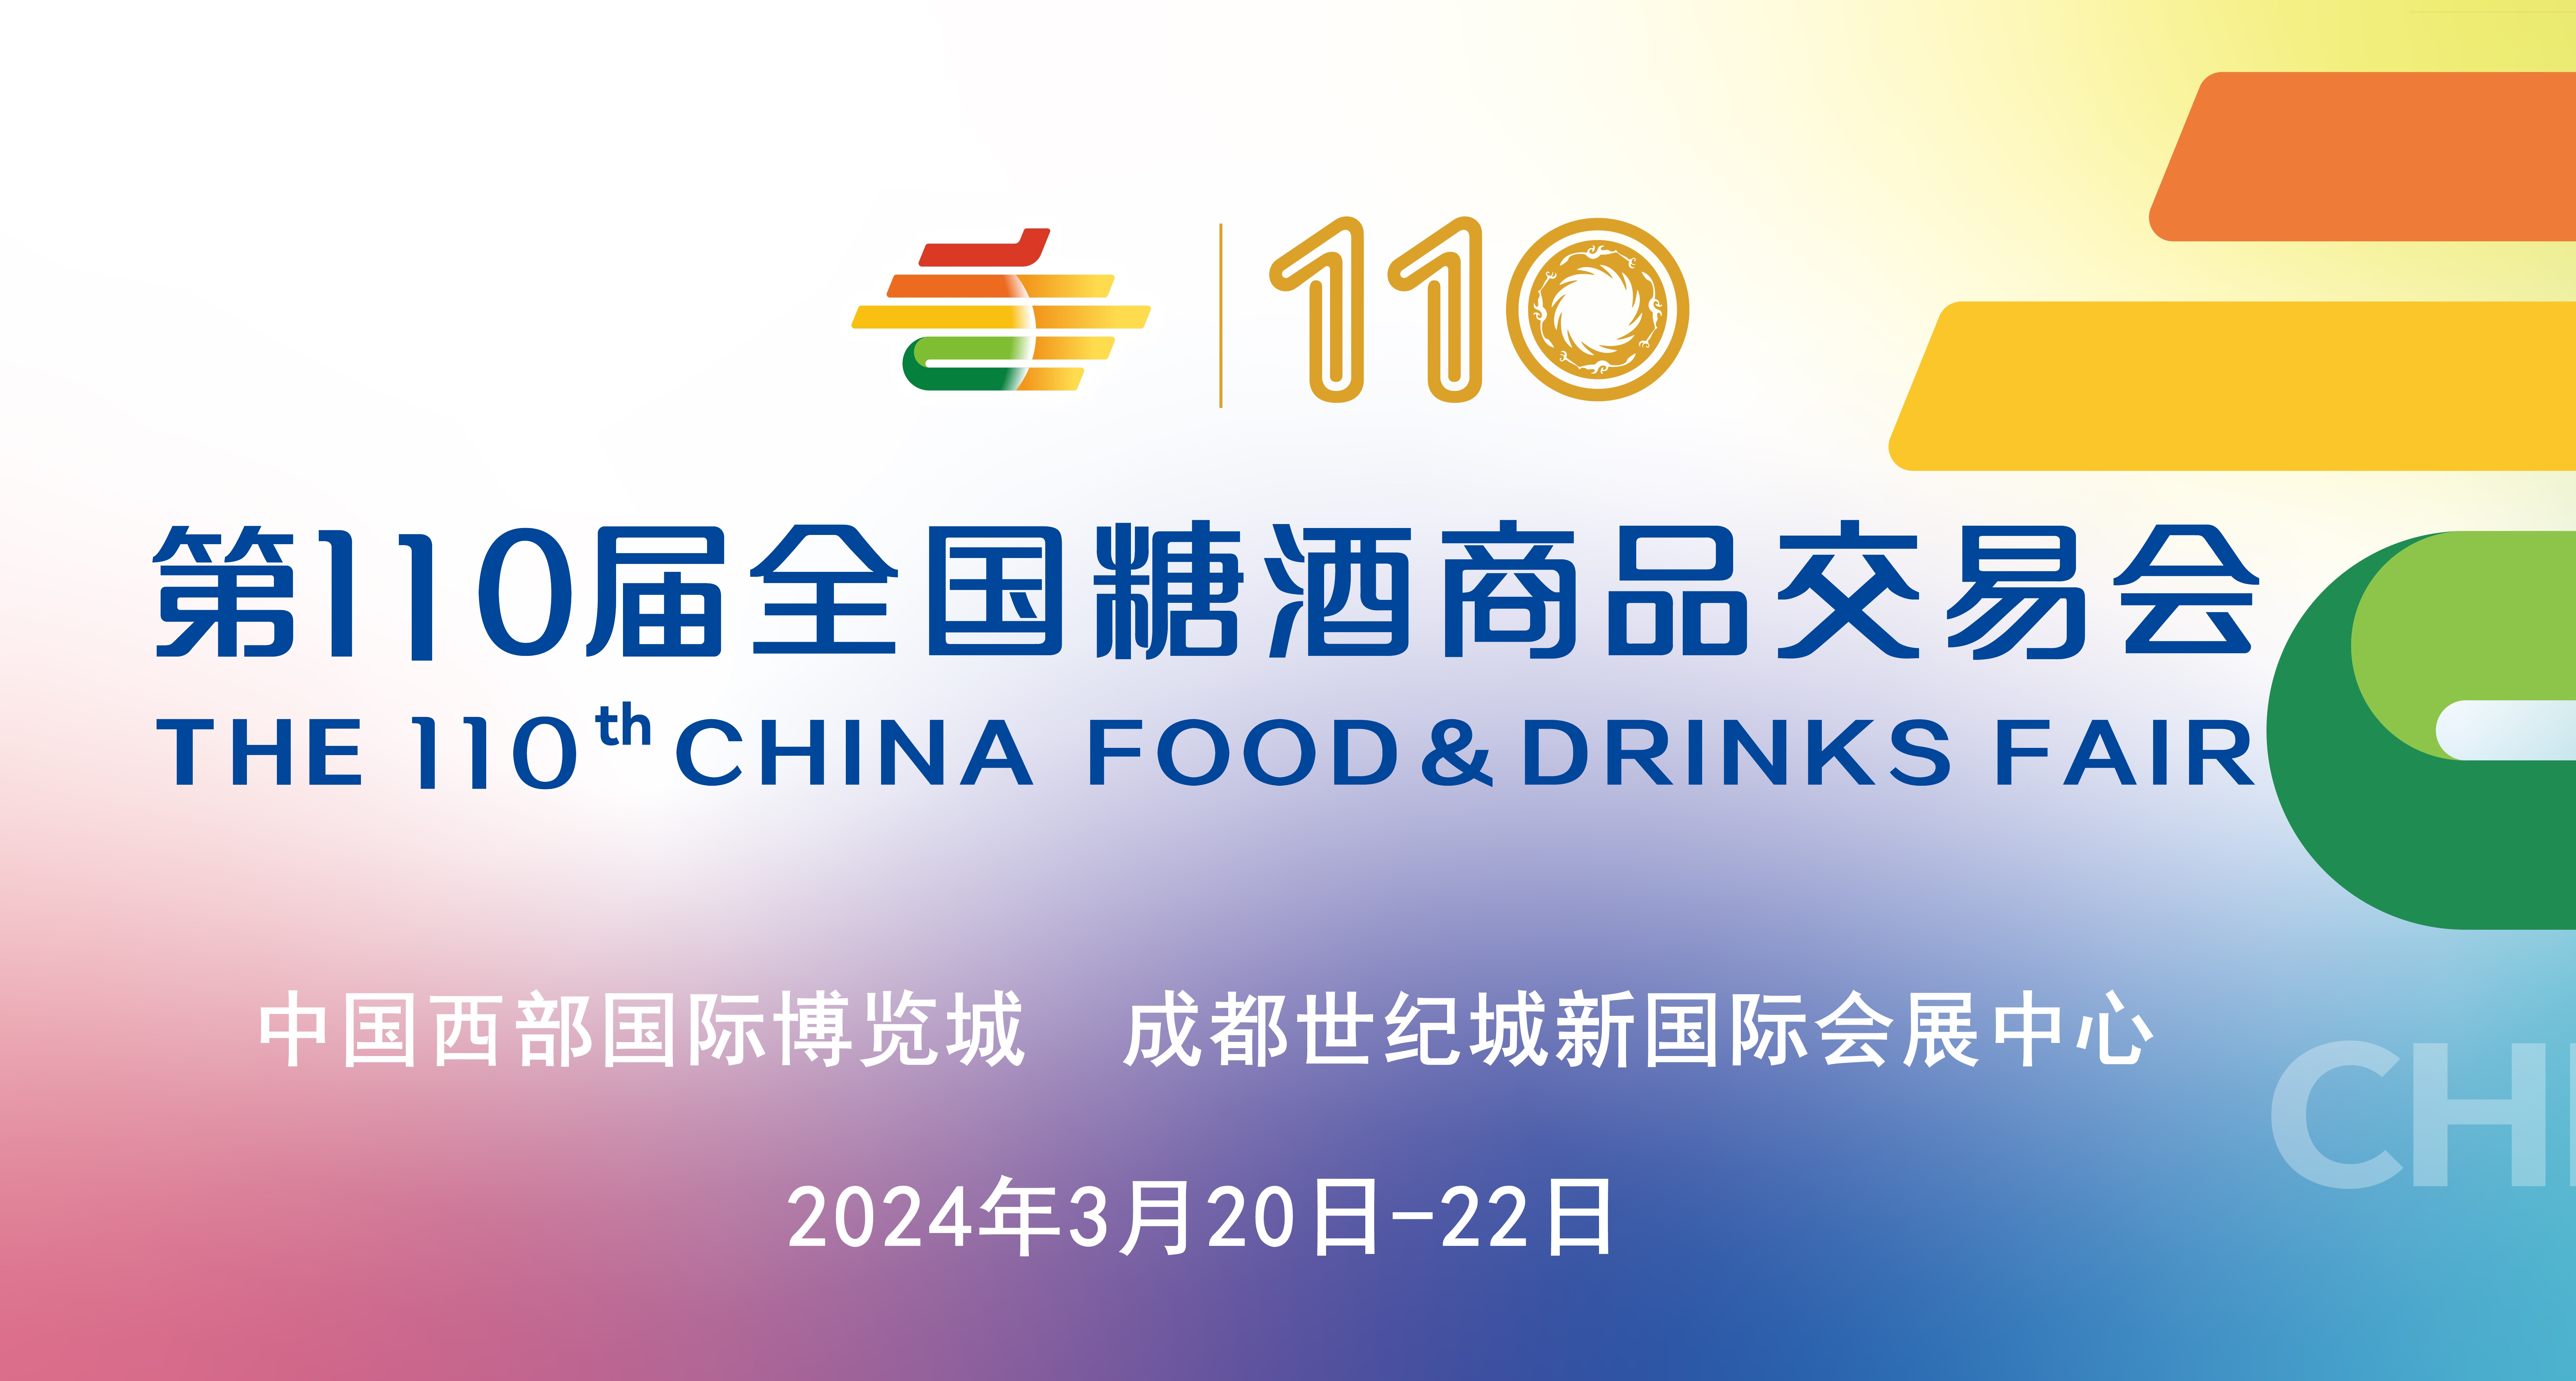 China Food& Drink Fair